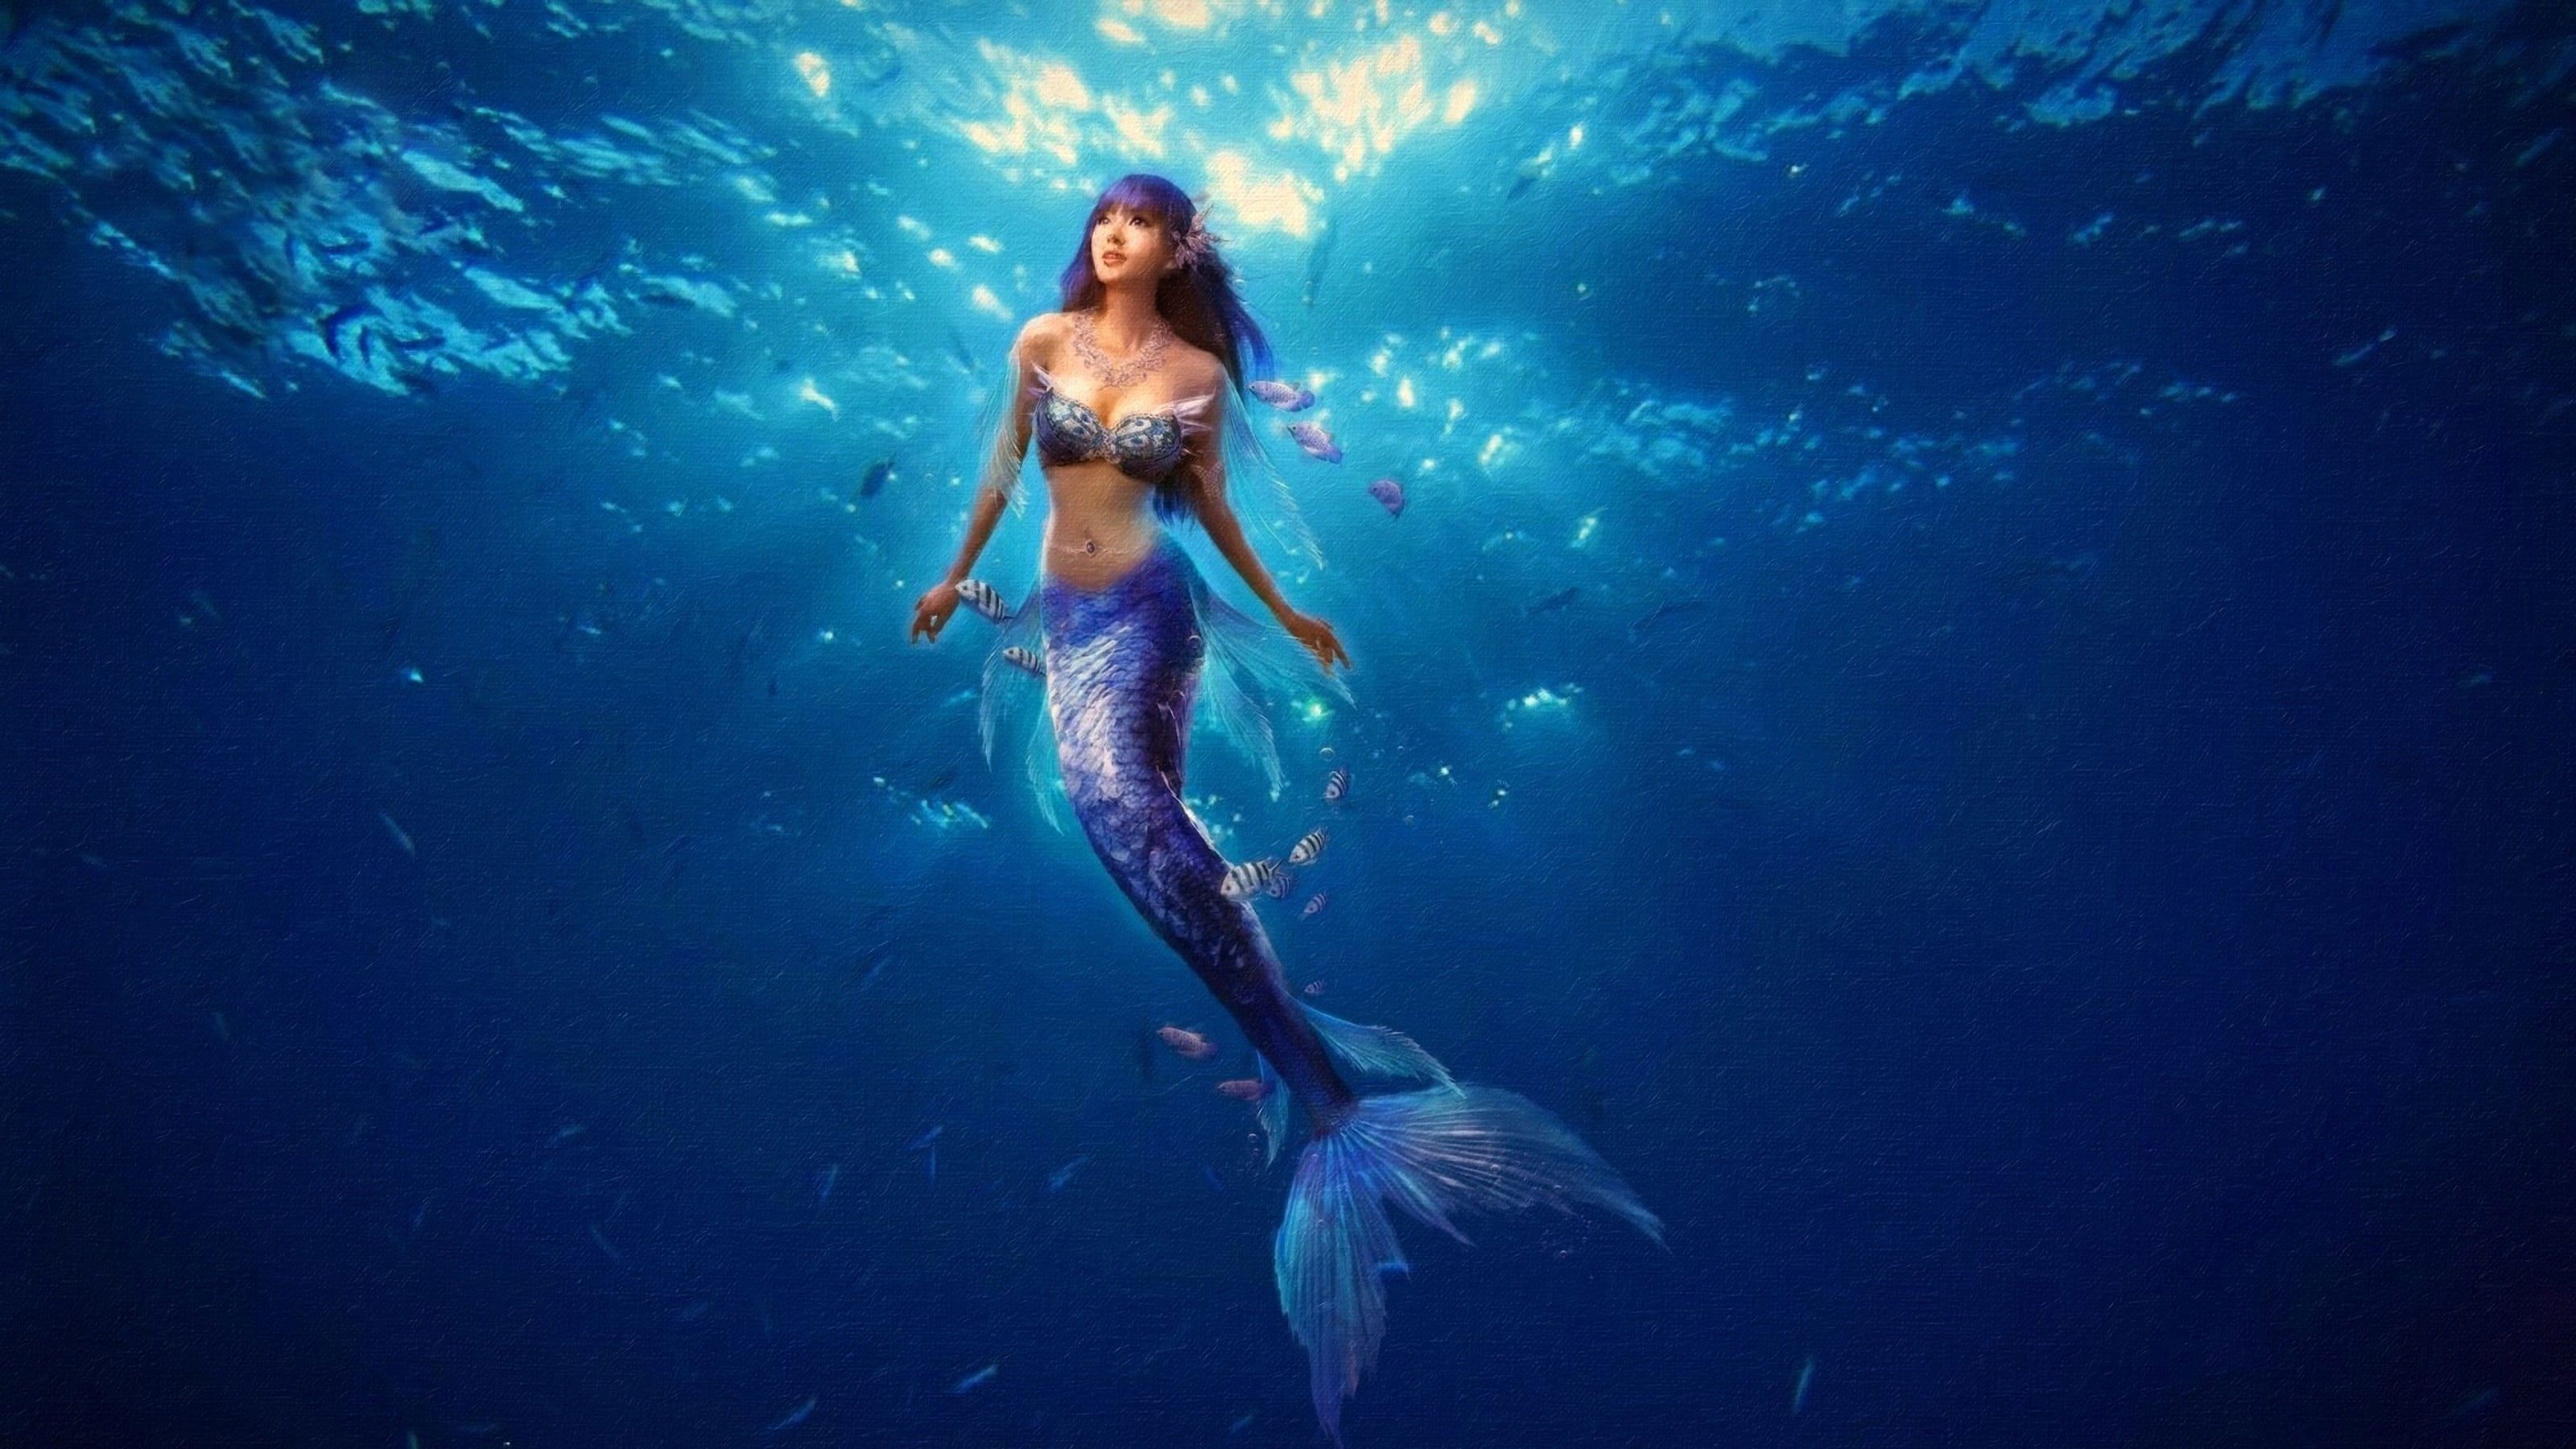 A mermaid in the ocean with fish swimming around her - Mermaid, underwater